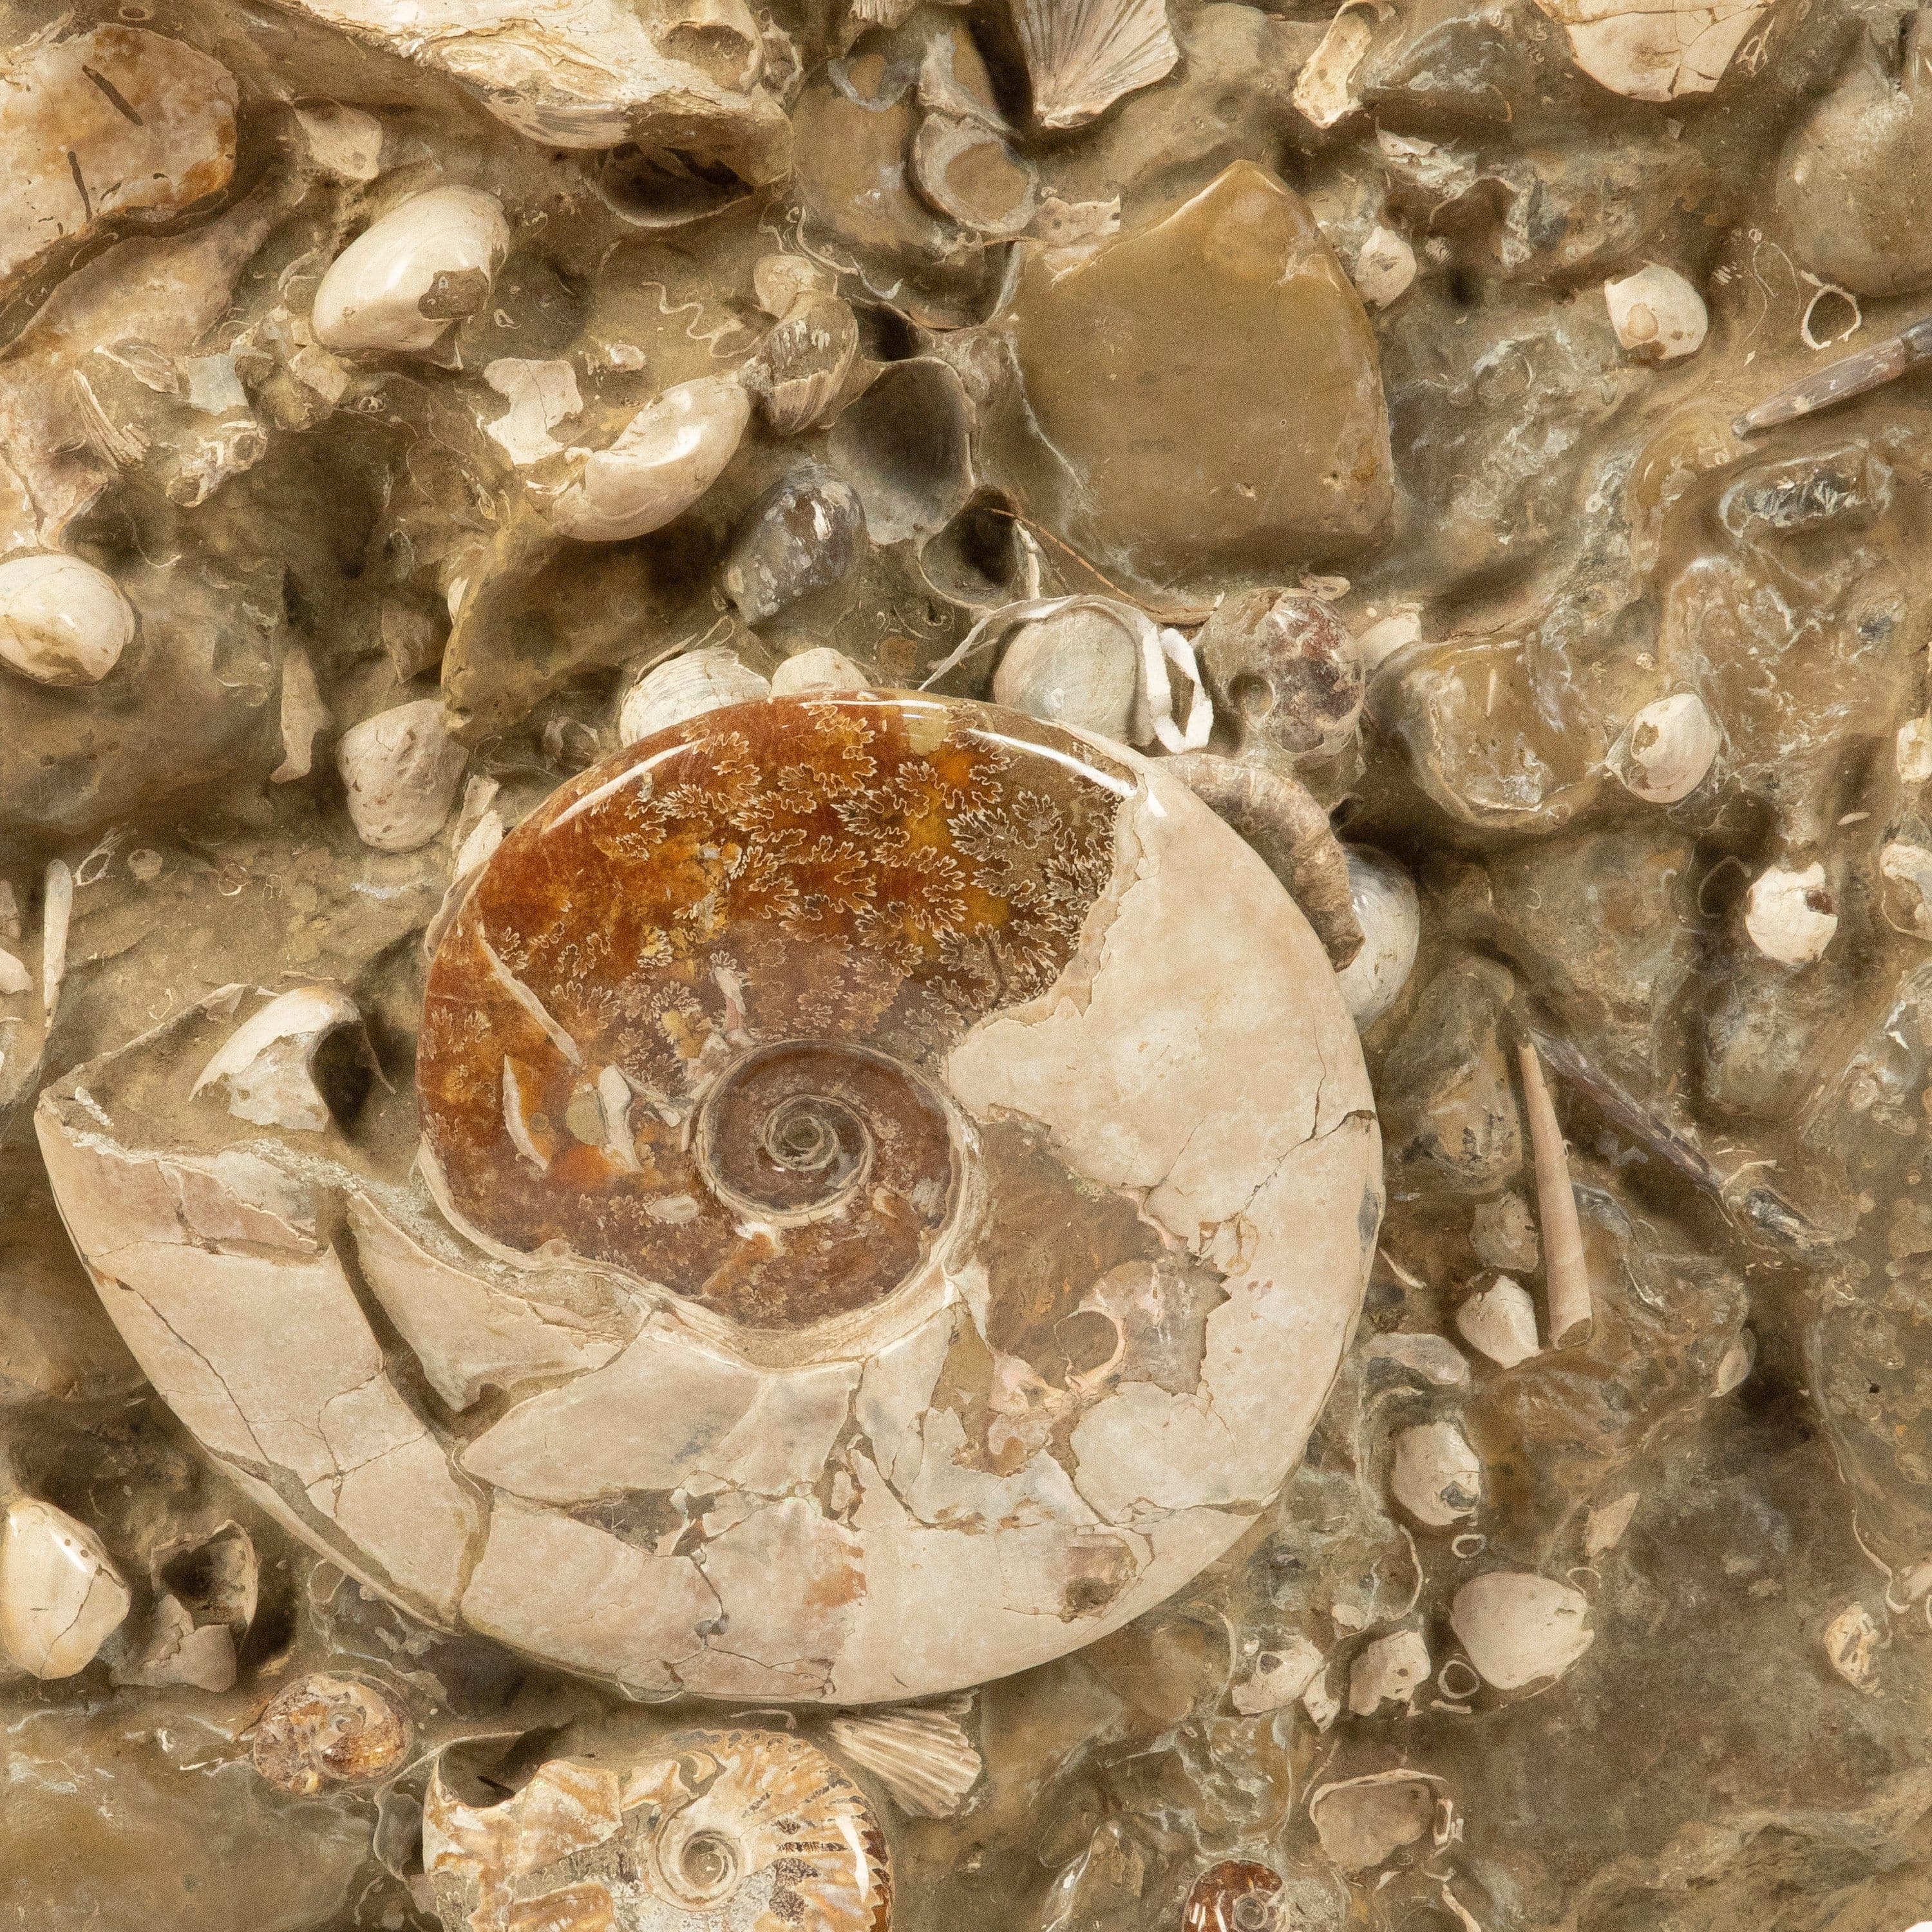 Kalifano Ammonites Natural Ammonite Colony in Matrix from Madagascar - 31" / 167 lbs AMM36000.002